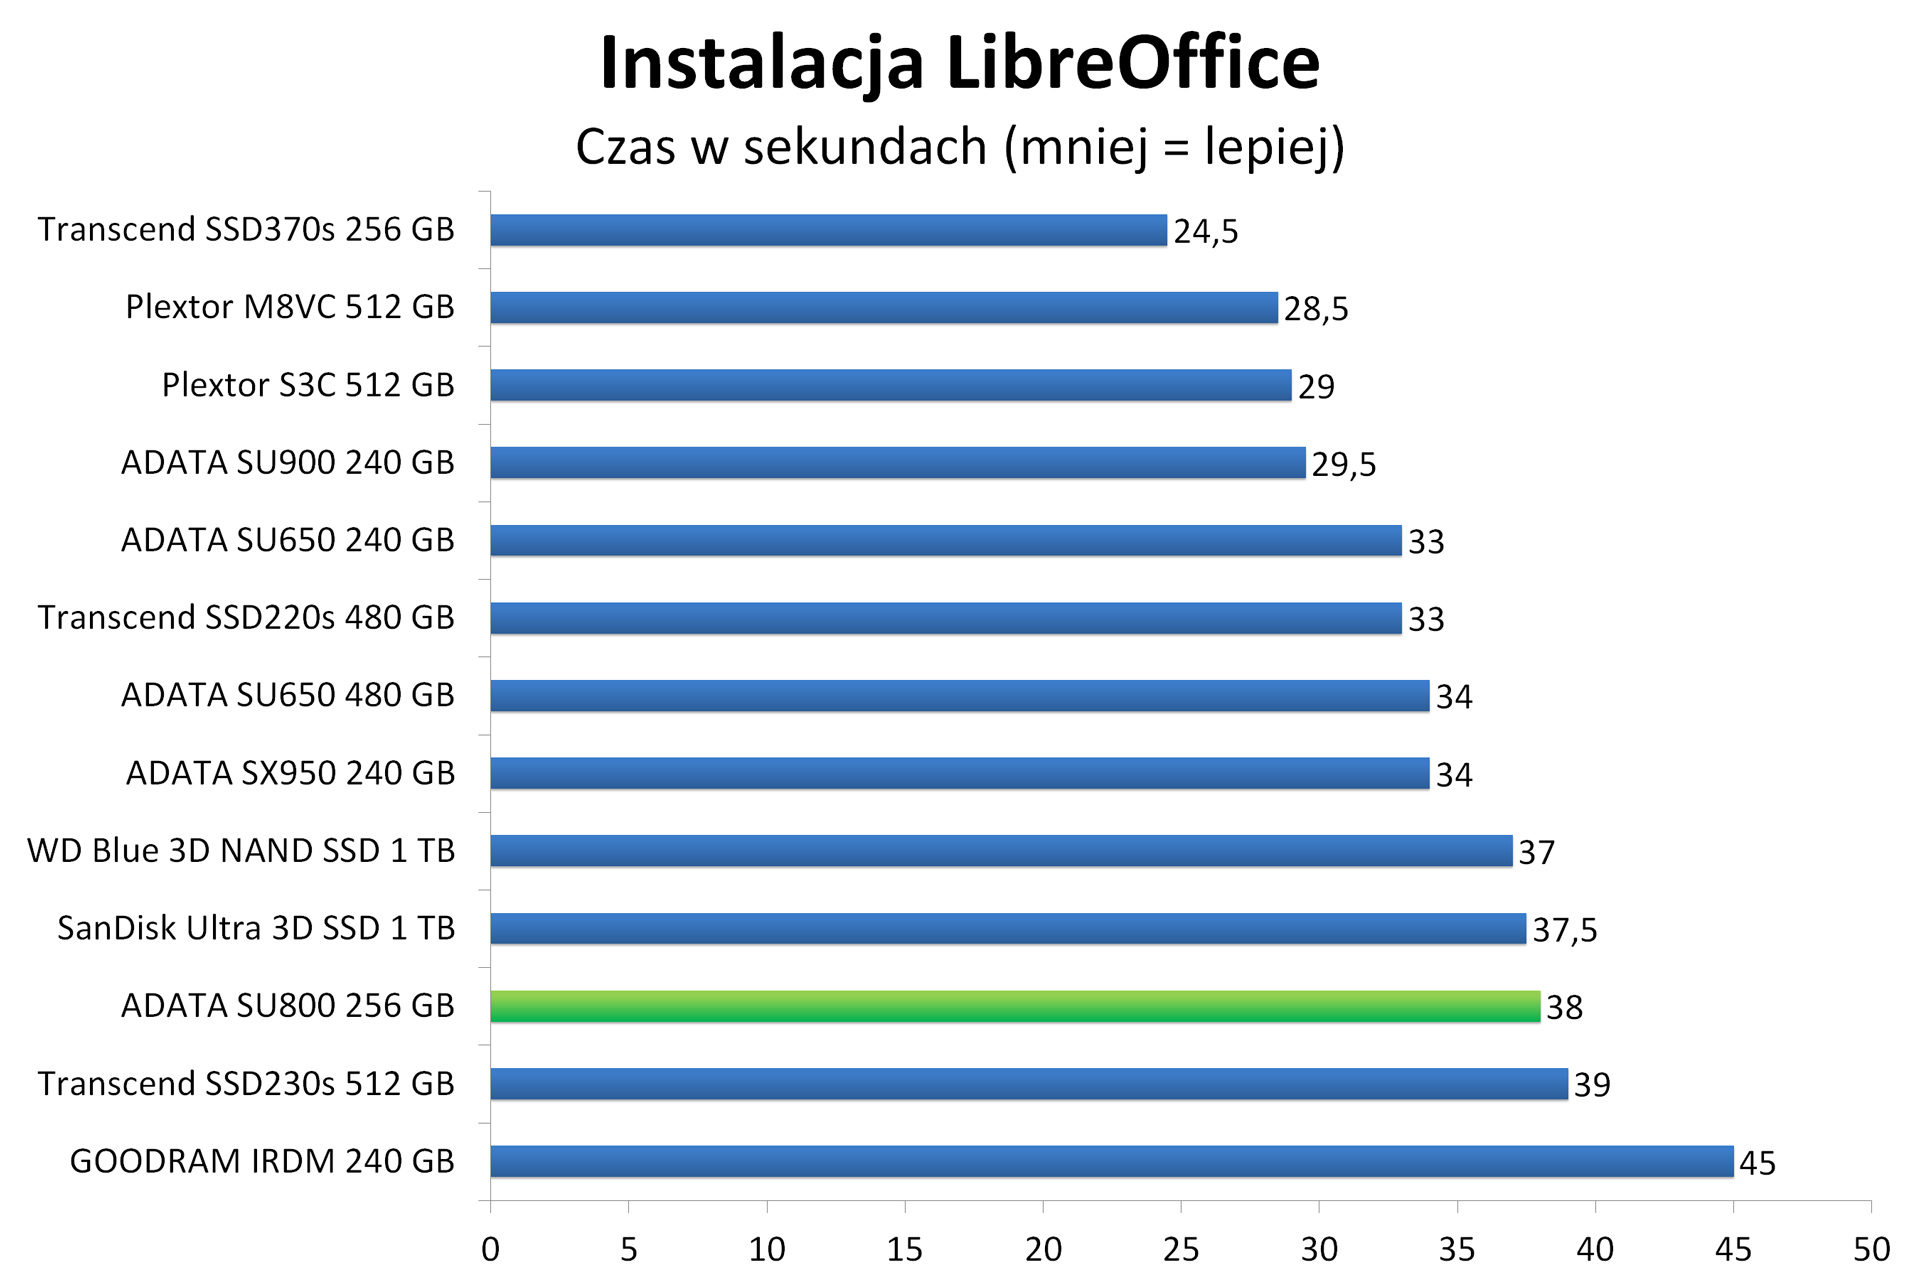 ADATA SU800 256 GB - Instalacja pakietu biurowego LibreOffice